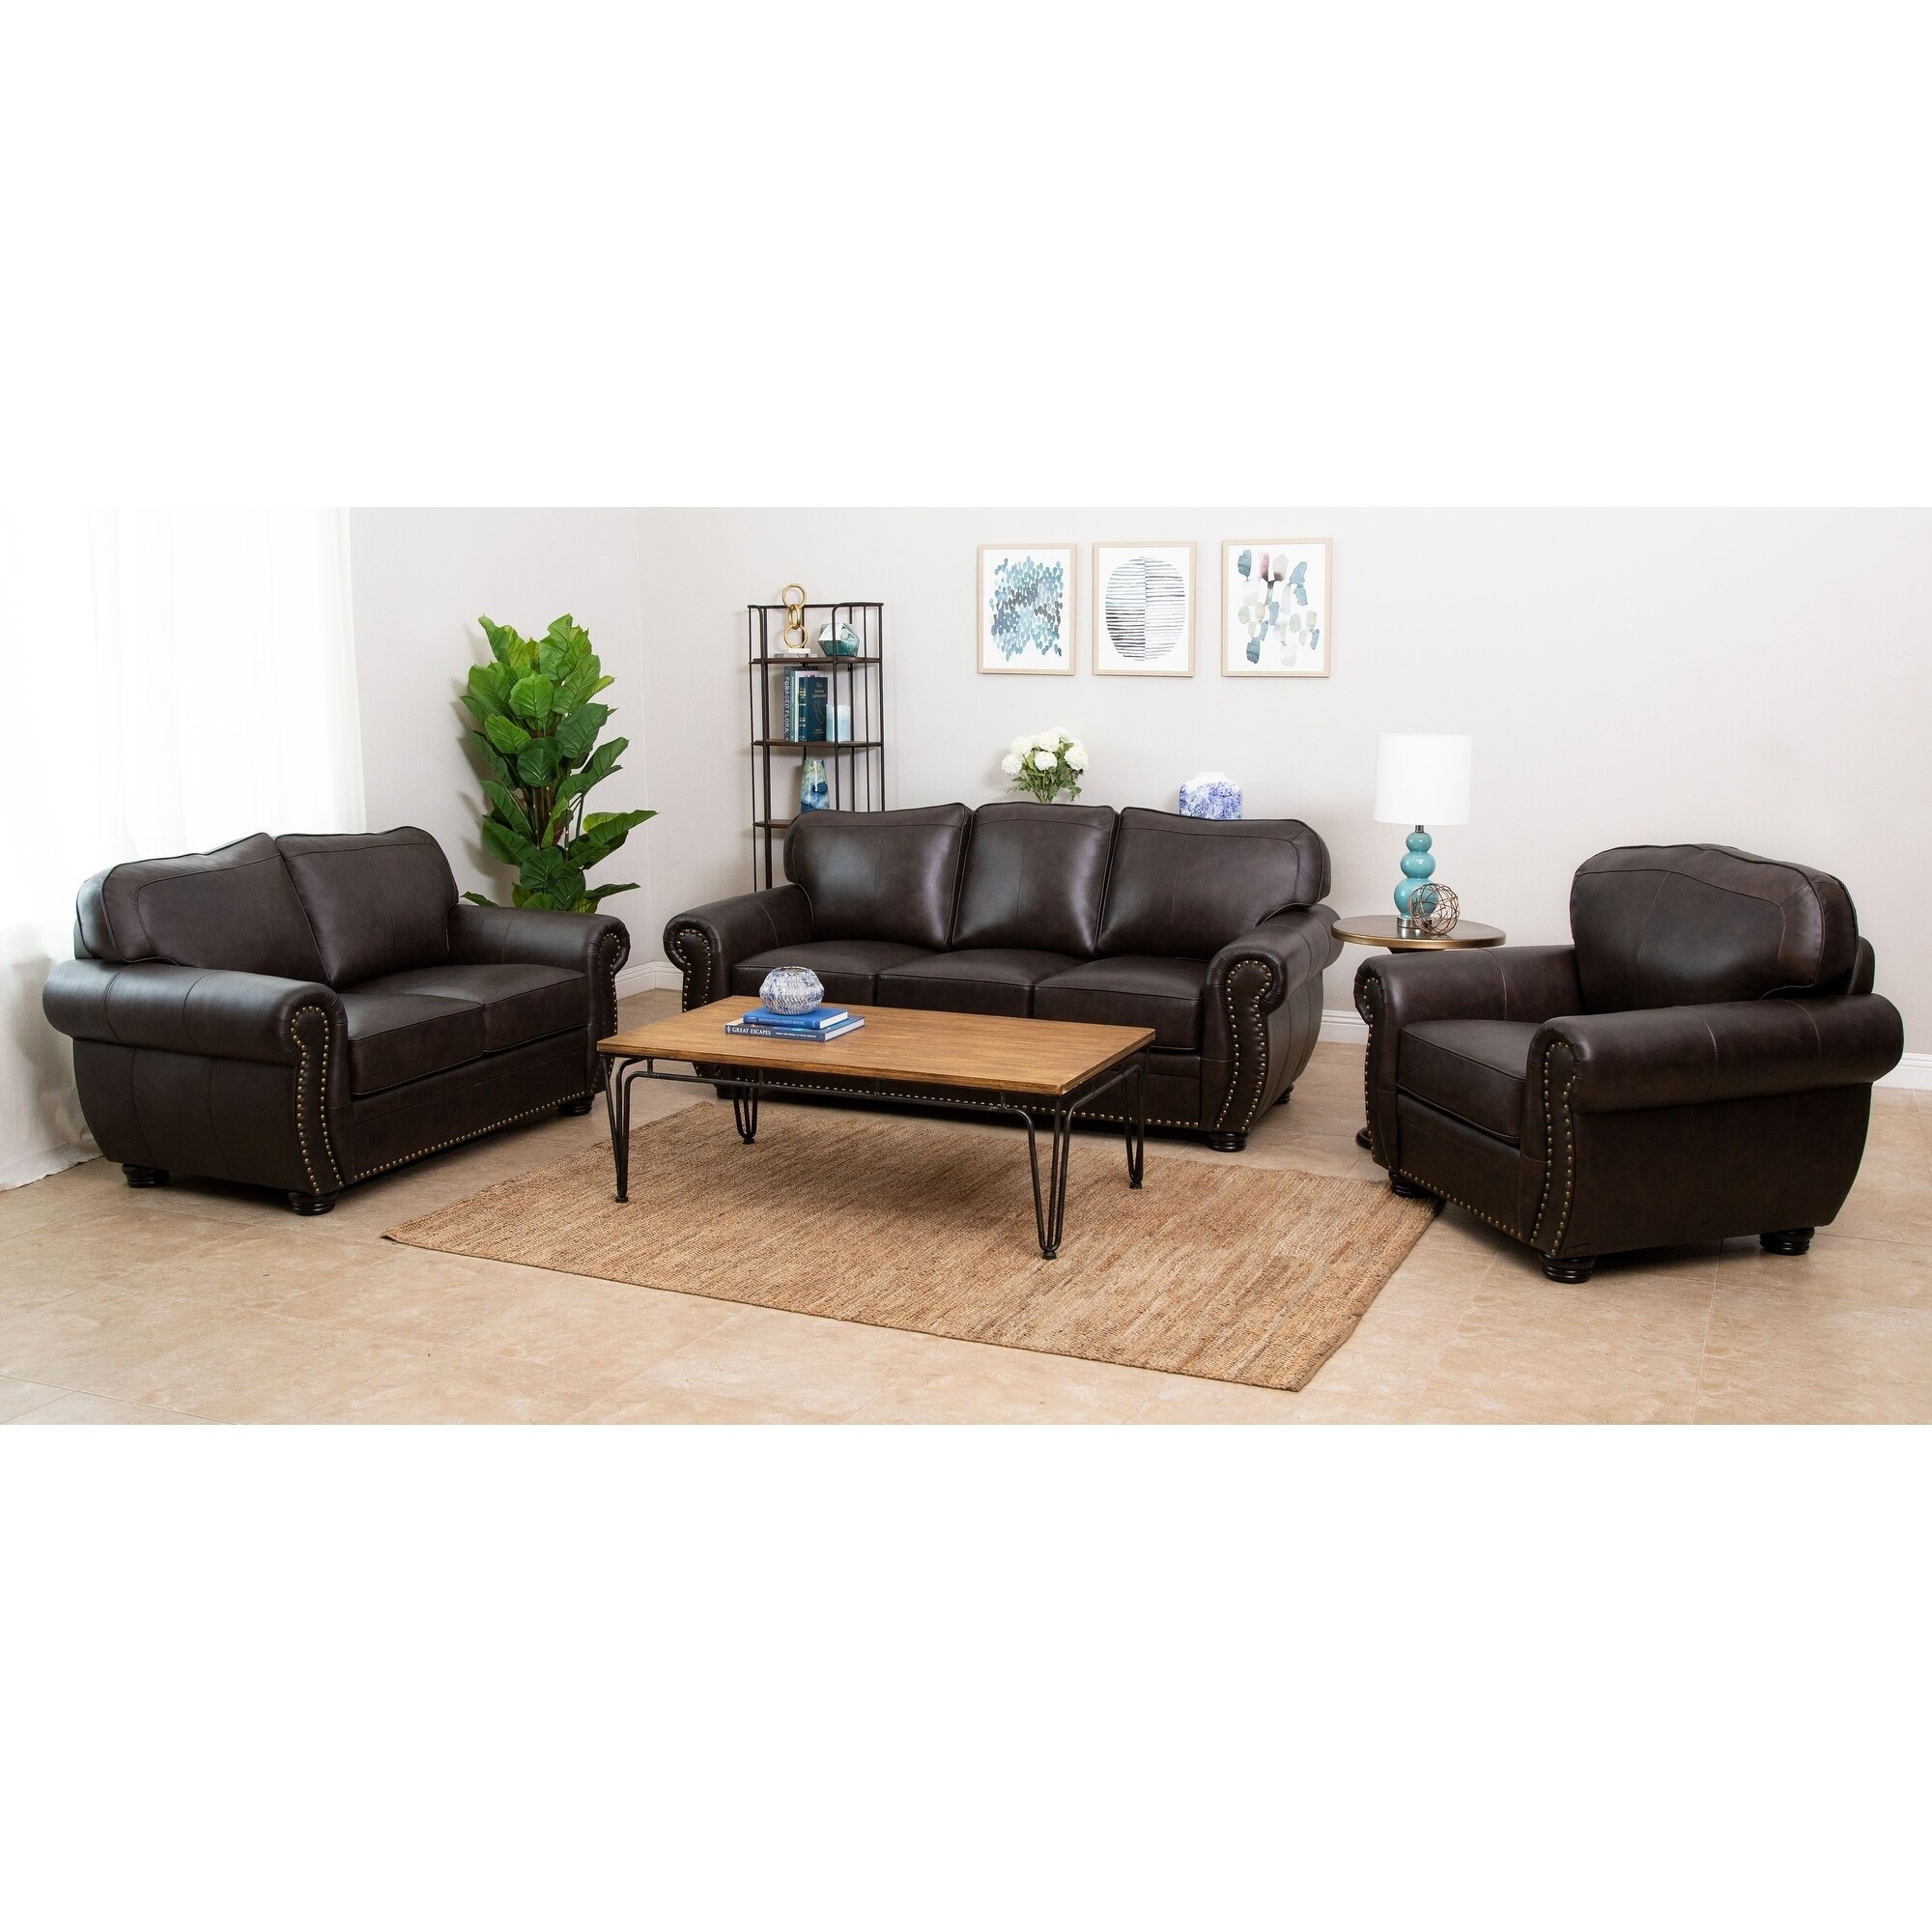 Abbyson Living Richfield Premium Top grain Leather Sofa, Loveseat, And Armchair Set